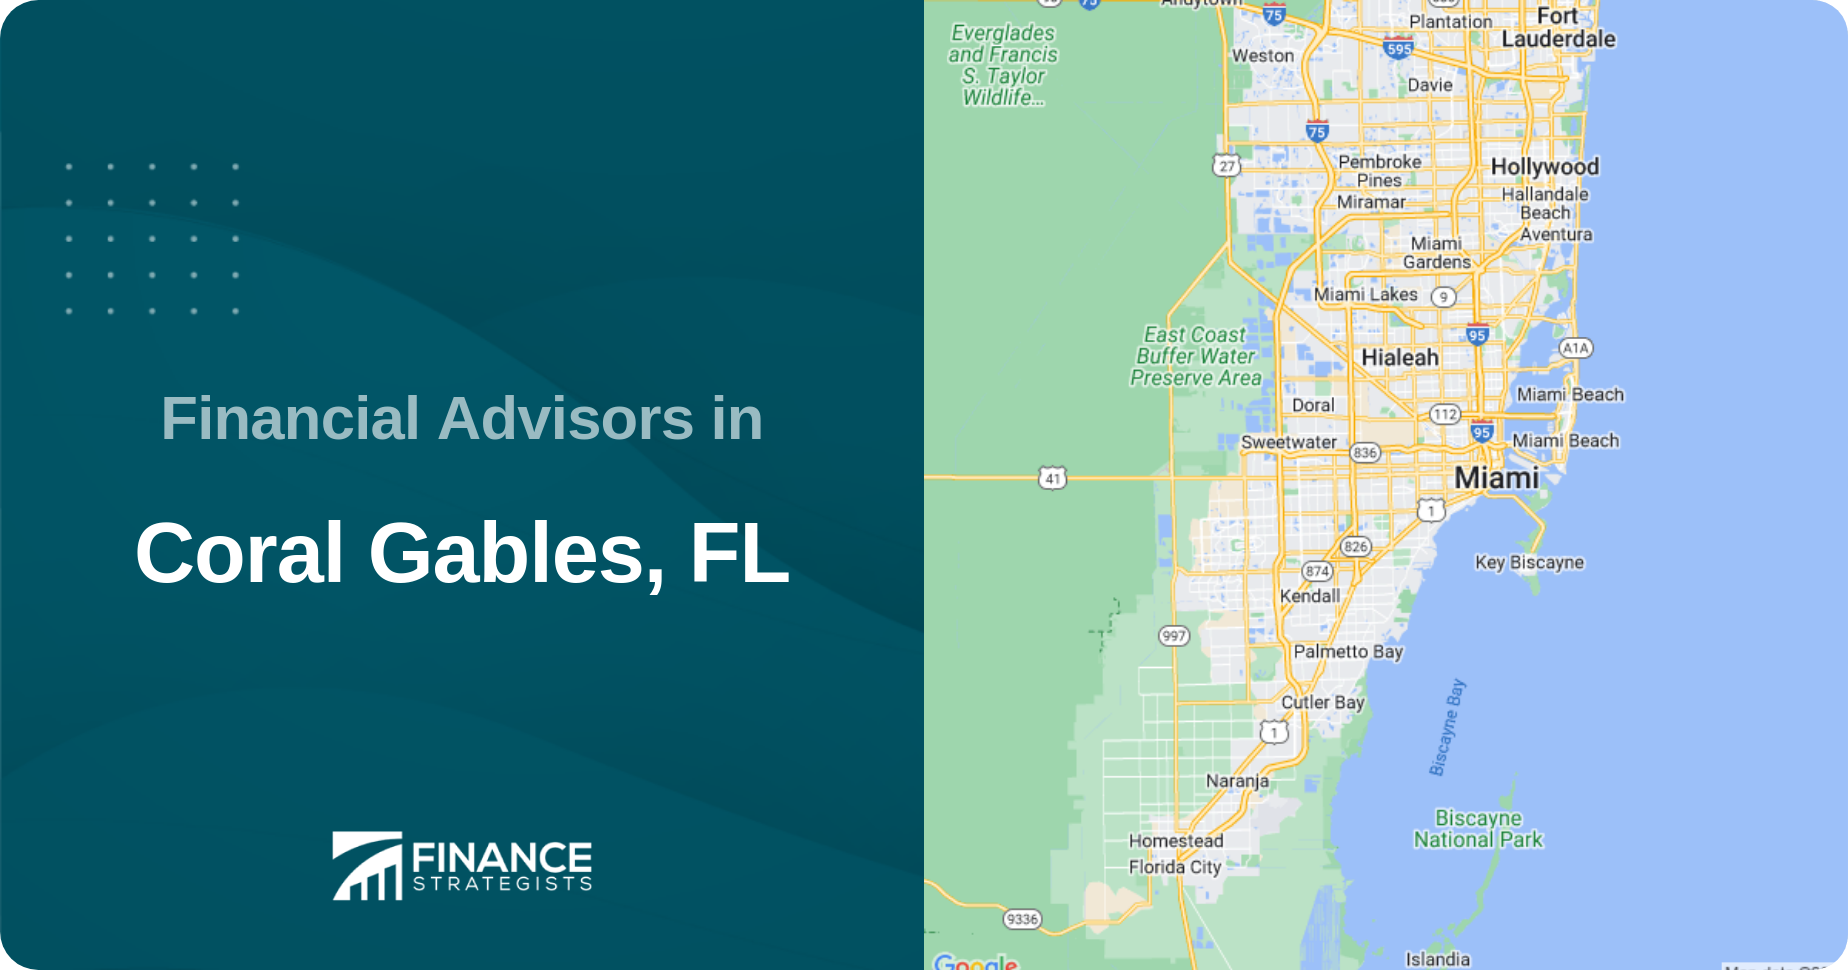 Financial Advisors in Coral Gables, FL